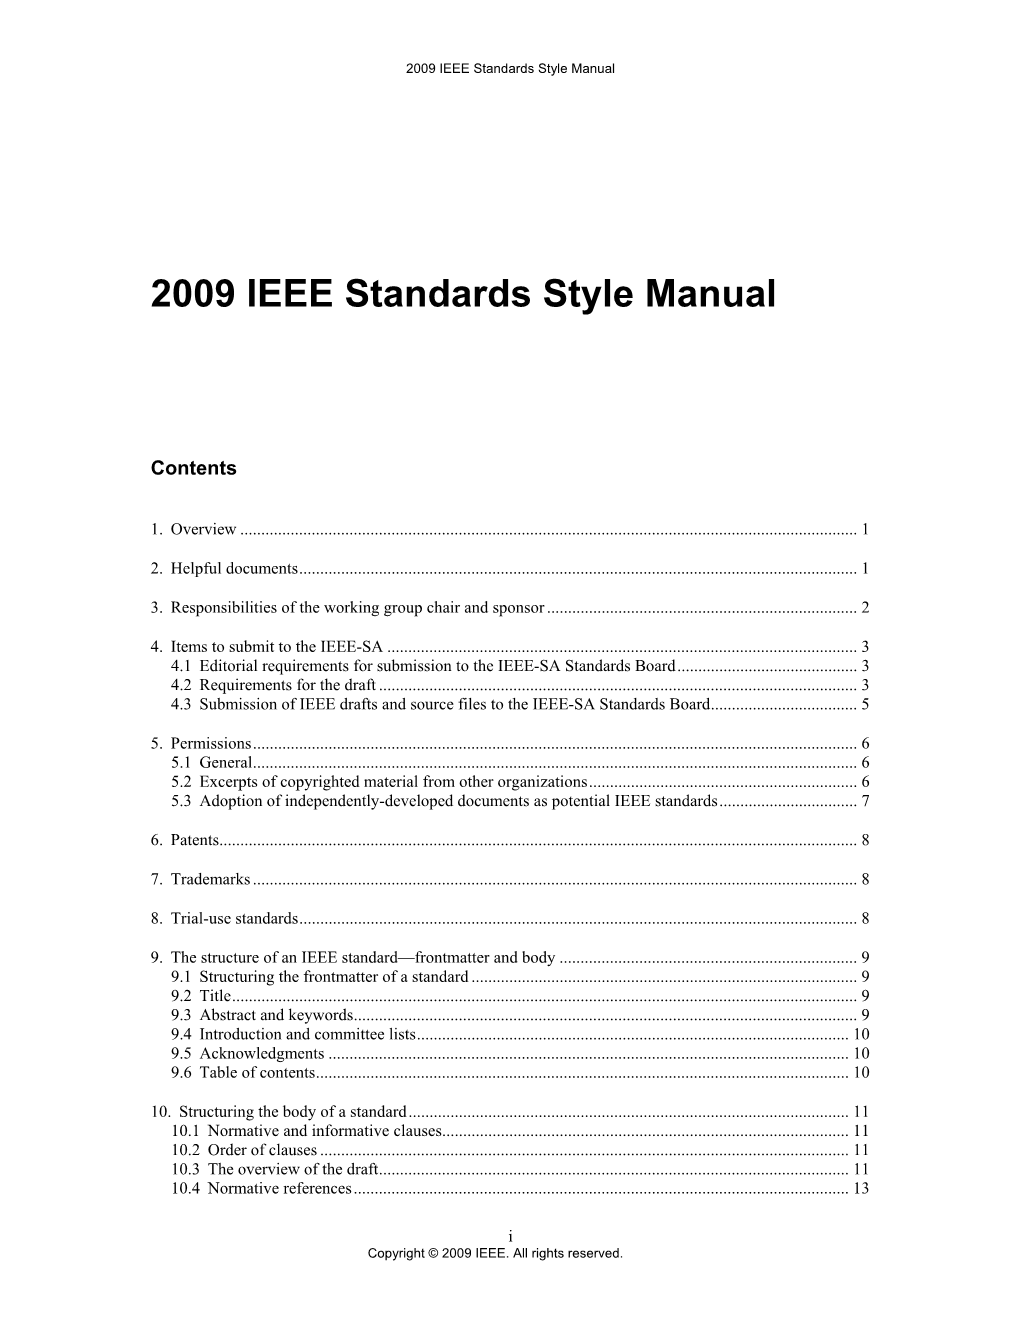 IEEE Standards Style Manual